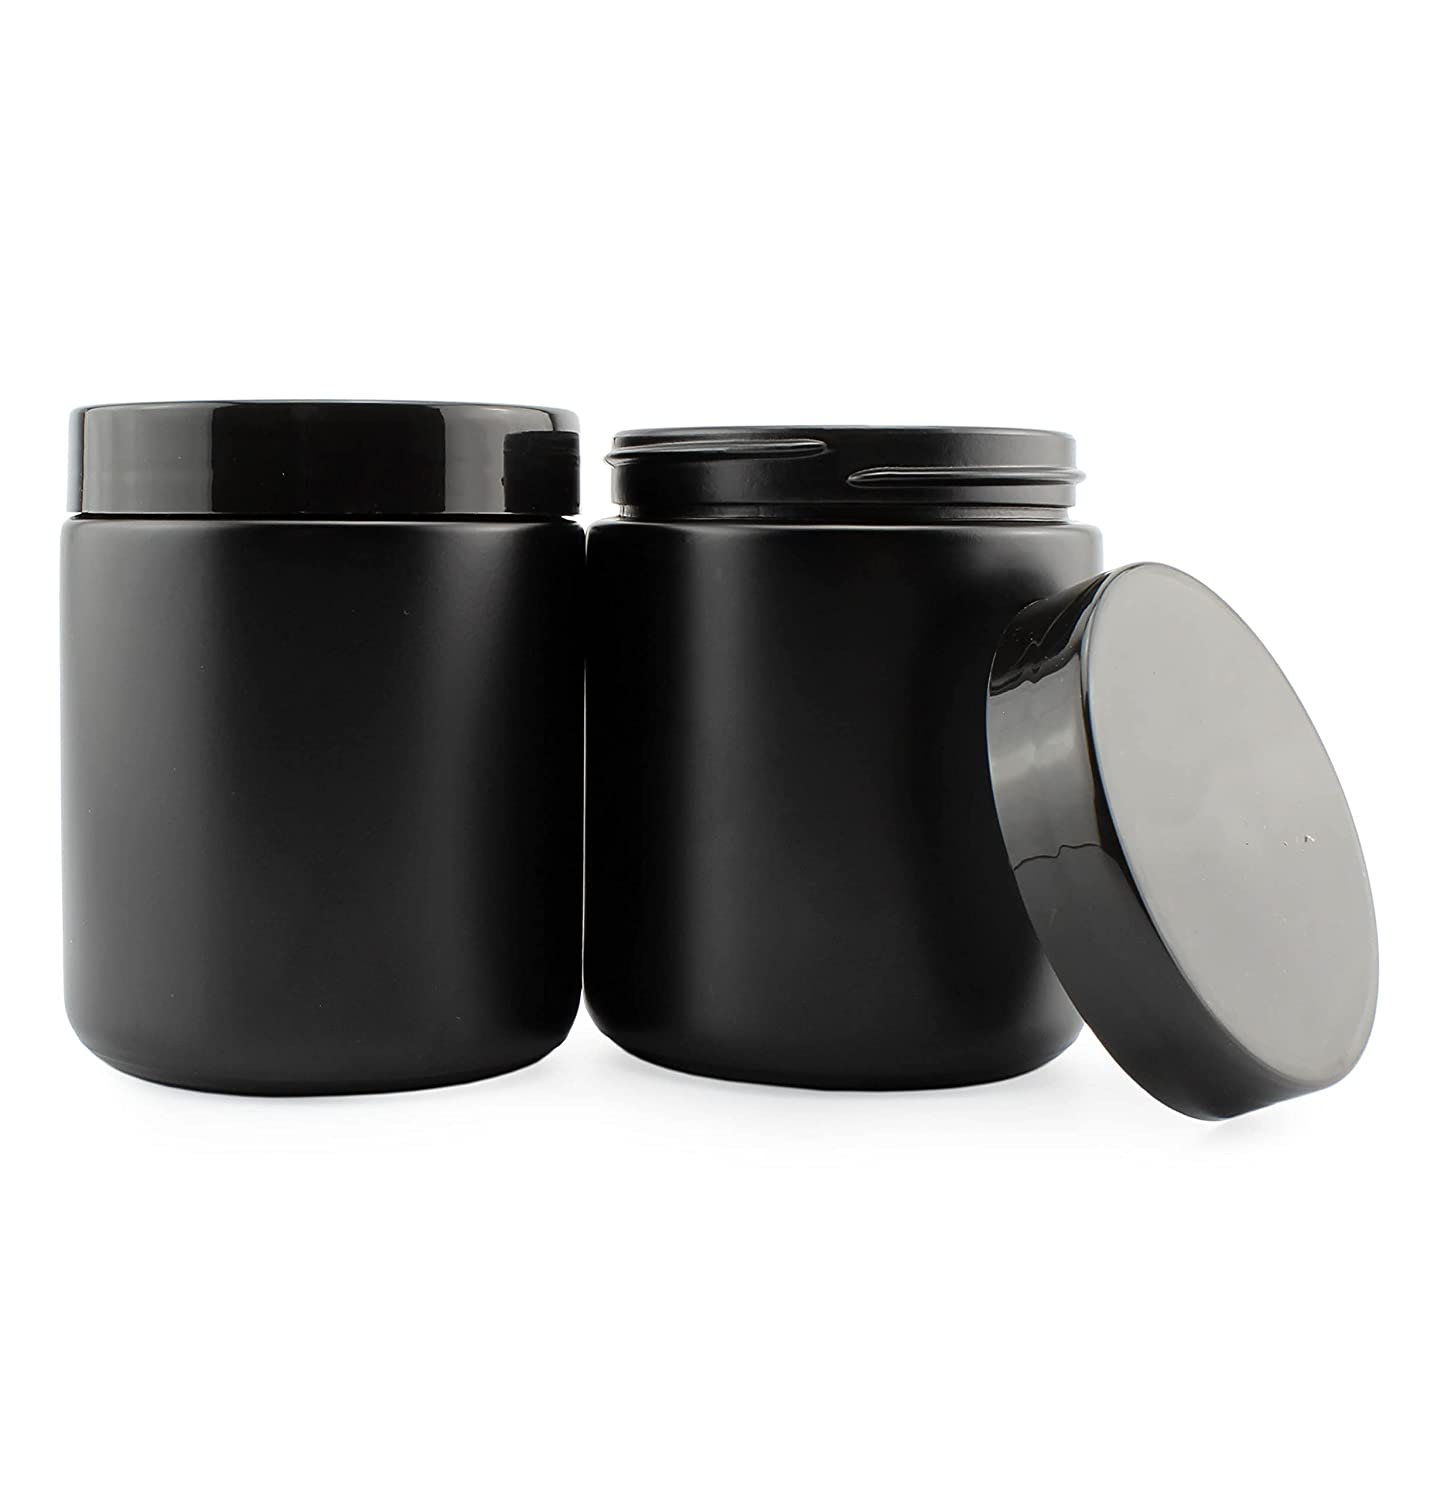 8oz Black Coated Glass Jars (6-Pack) - sh1928cb08oz